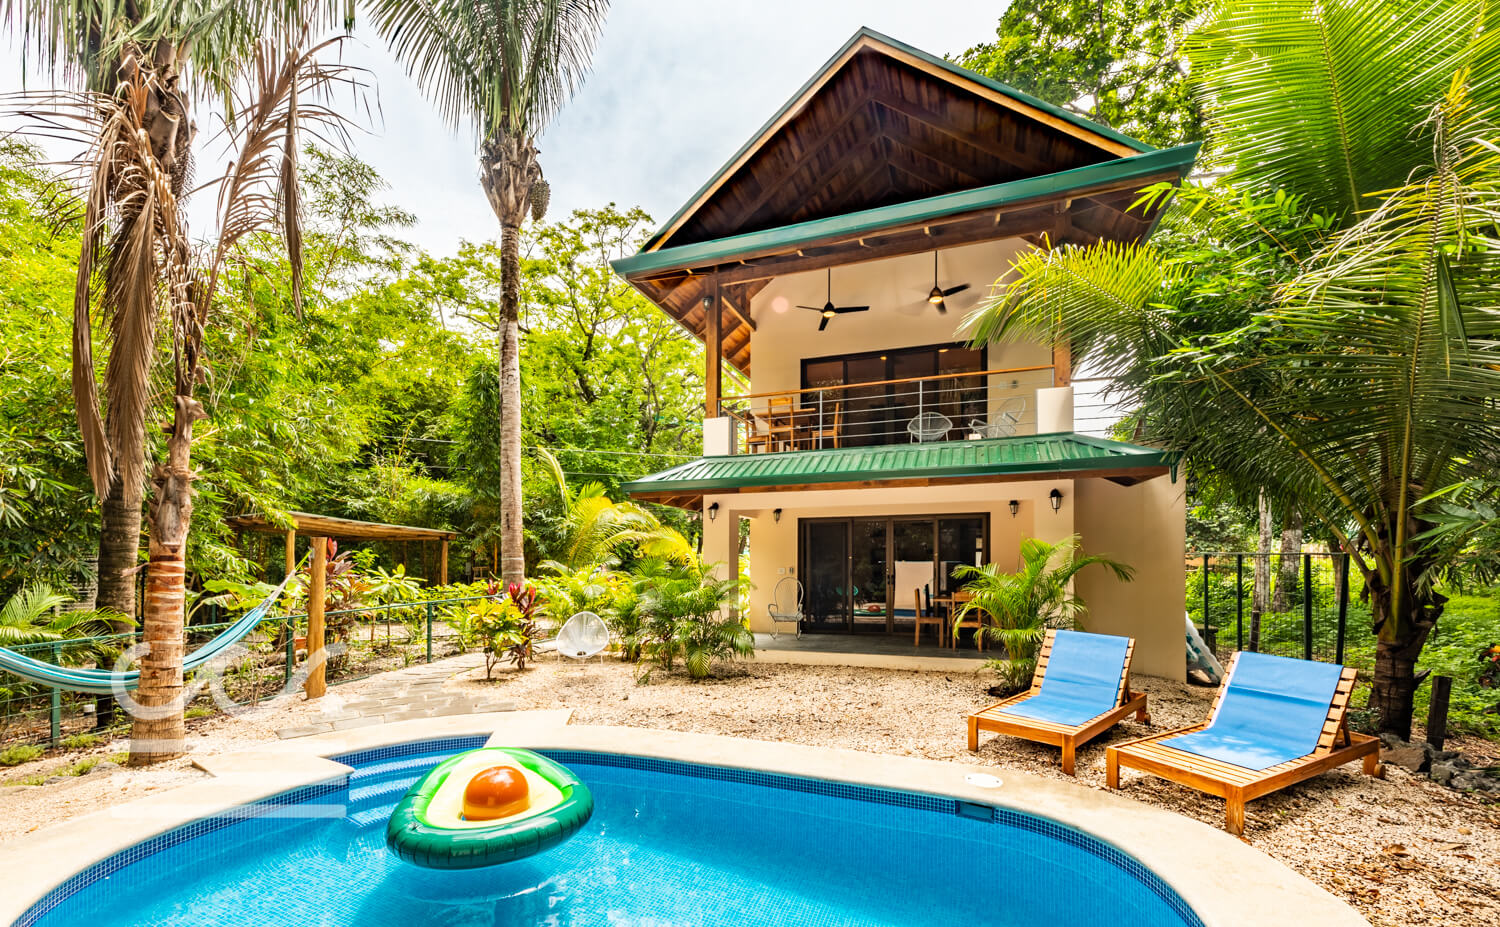 Casa-Nambi-Wanderlust-Realty-Real-Estate-Rentals-Nosara-Costa-Rica-3.jpg